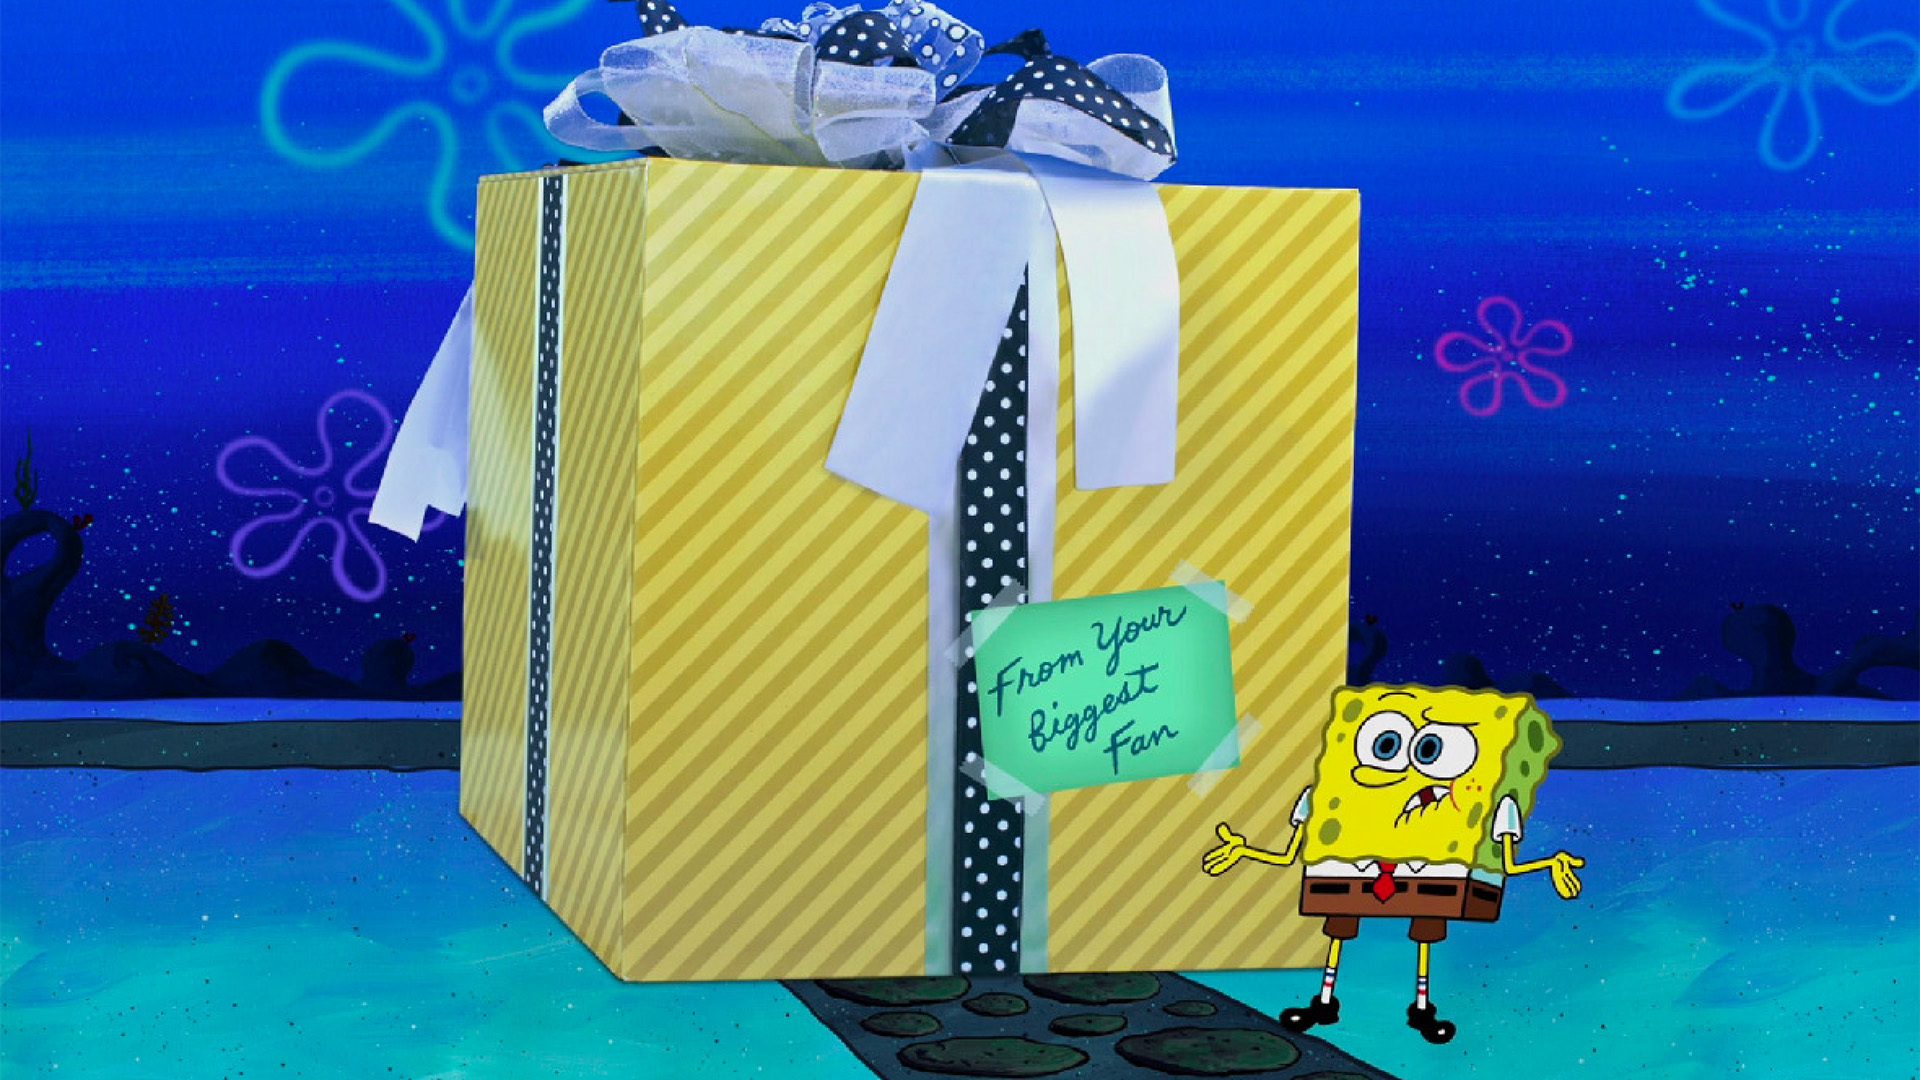 spongebob bob esponga  Spongebob birthday party decorations, Spongebob  birthday party, Spongebob party decorations